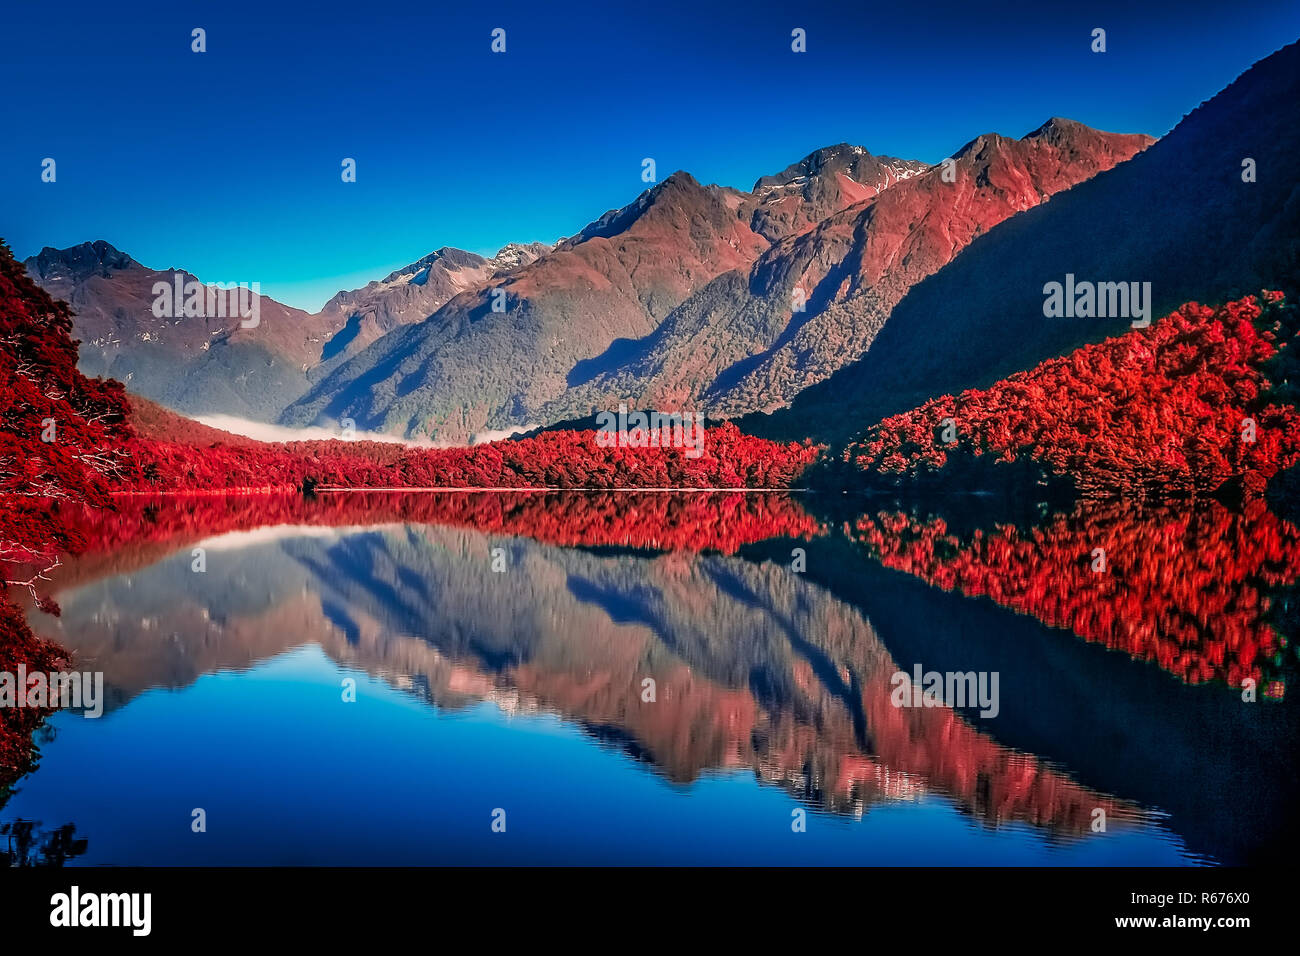 Spiegel See in Neuseeland Stockfotografie - Alamy